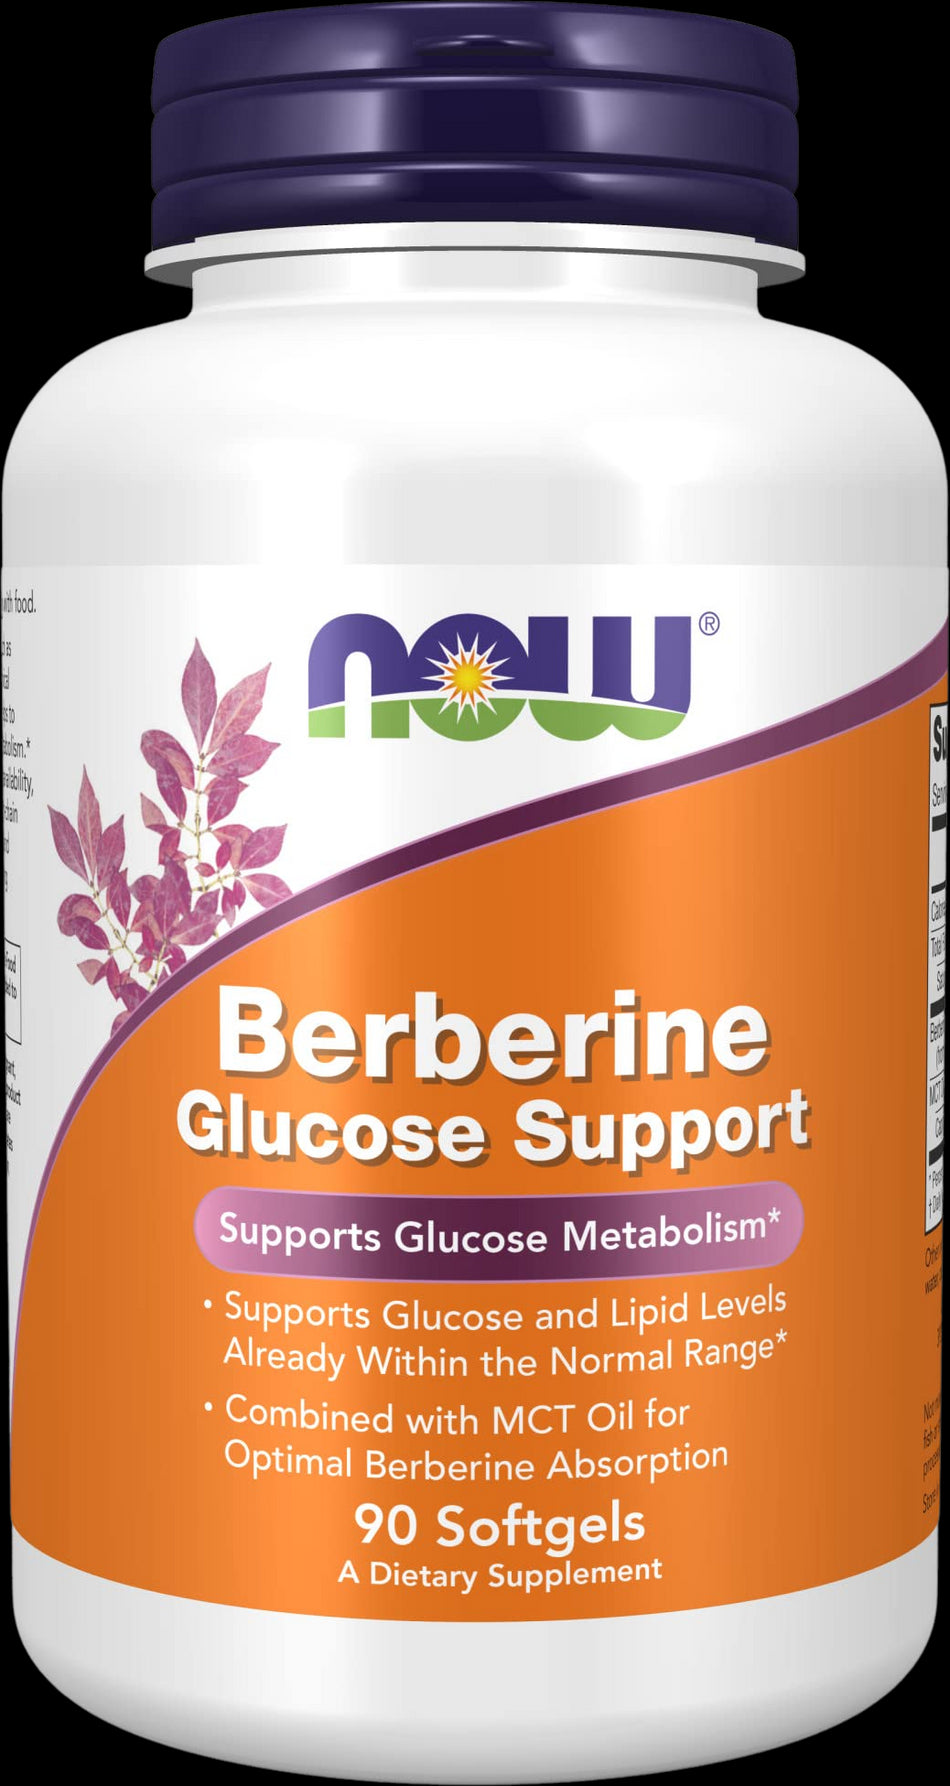 Berberine / Glucose Support - BadiZdrav.BG